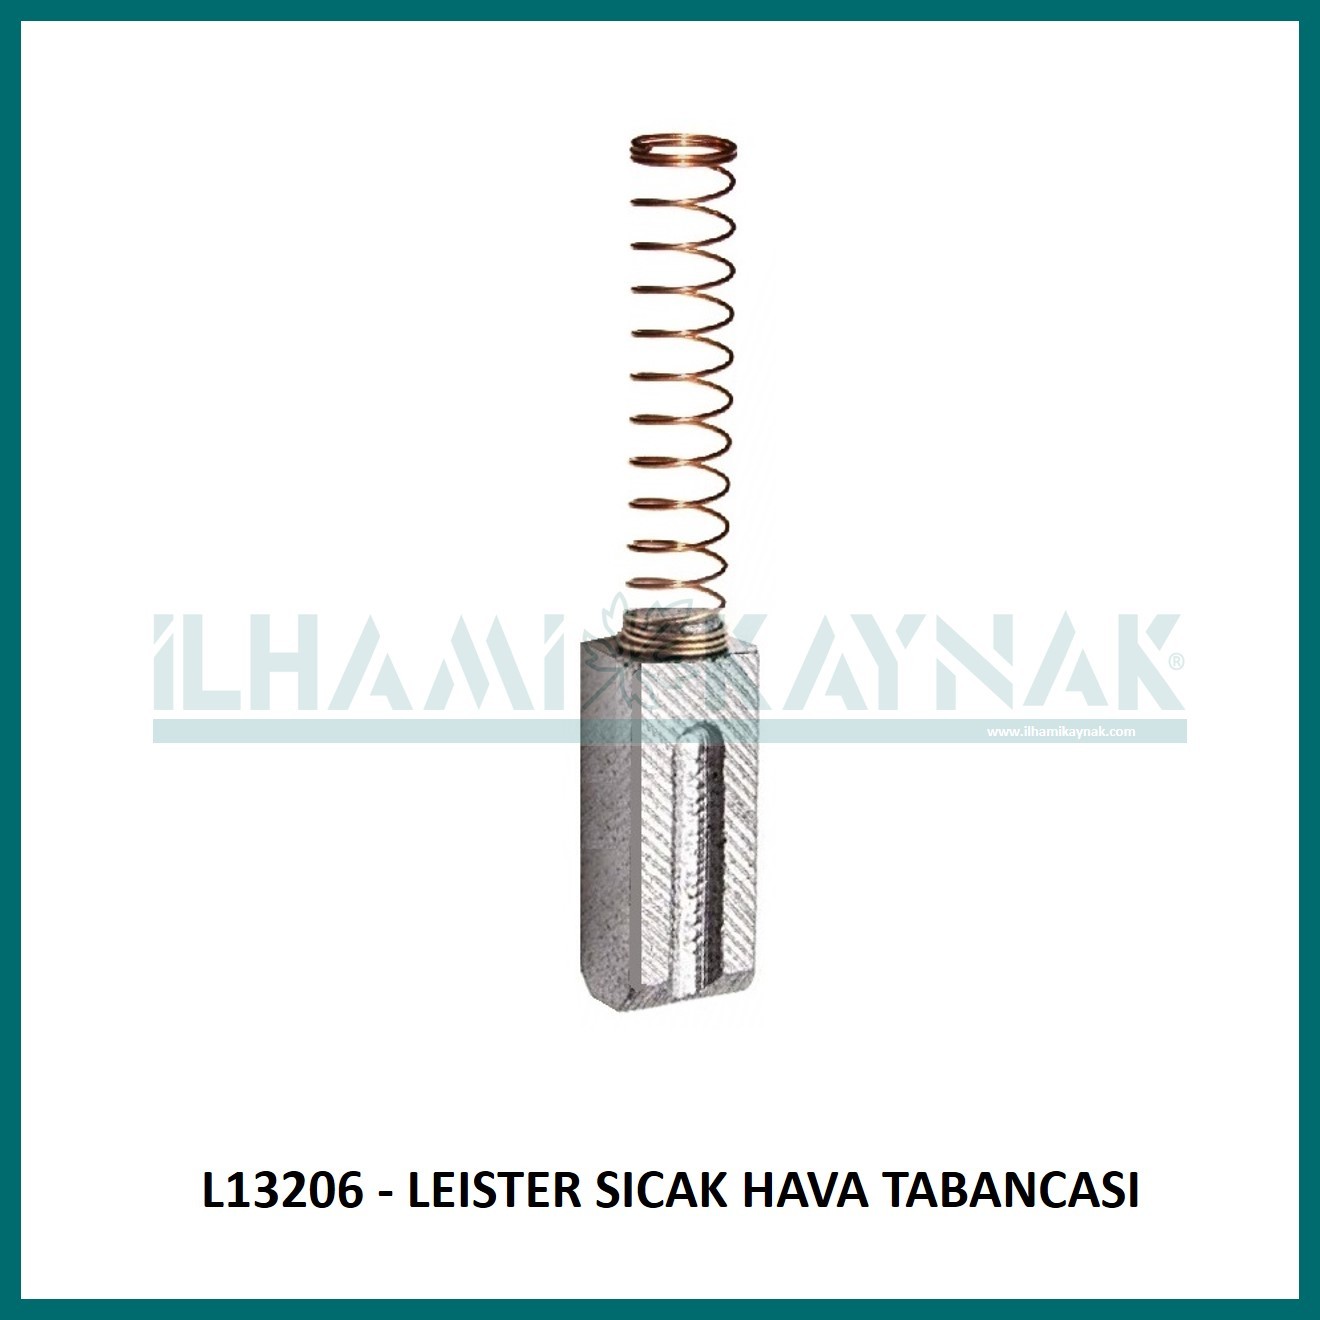 L13206 - LEISTER SICAK HAVA TABANCASI - 5*6*15 mm - Minimum Satın Alım: 10 Adet